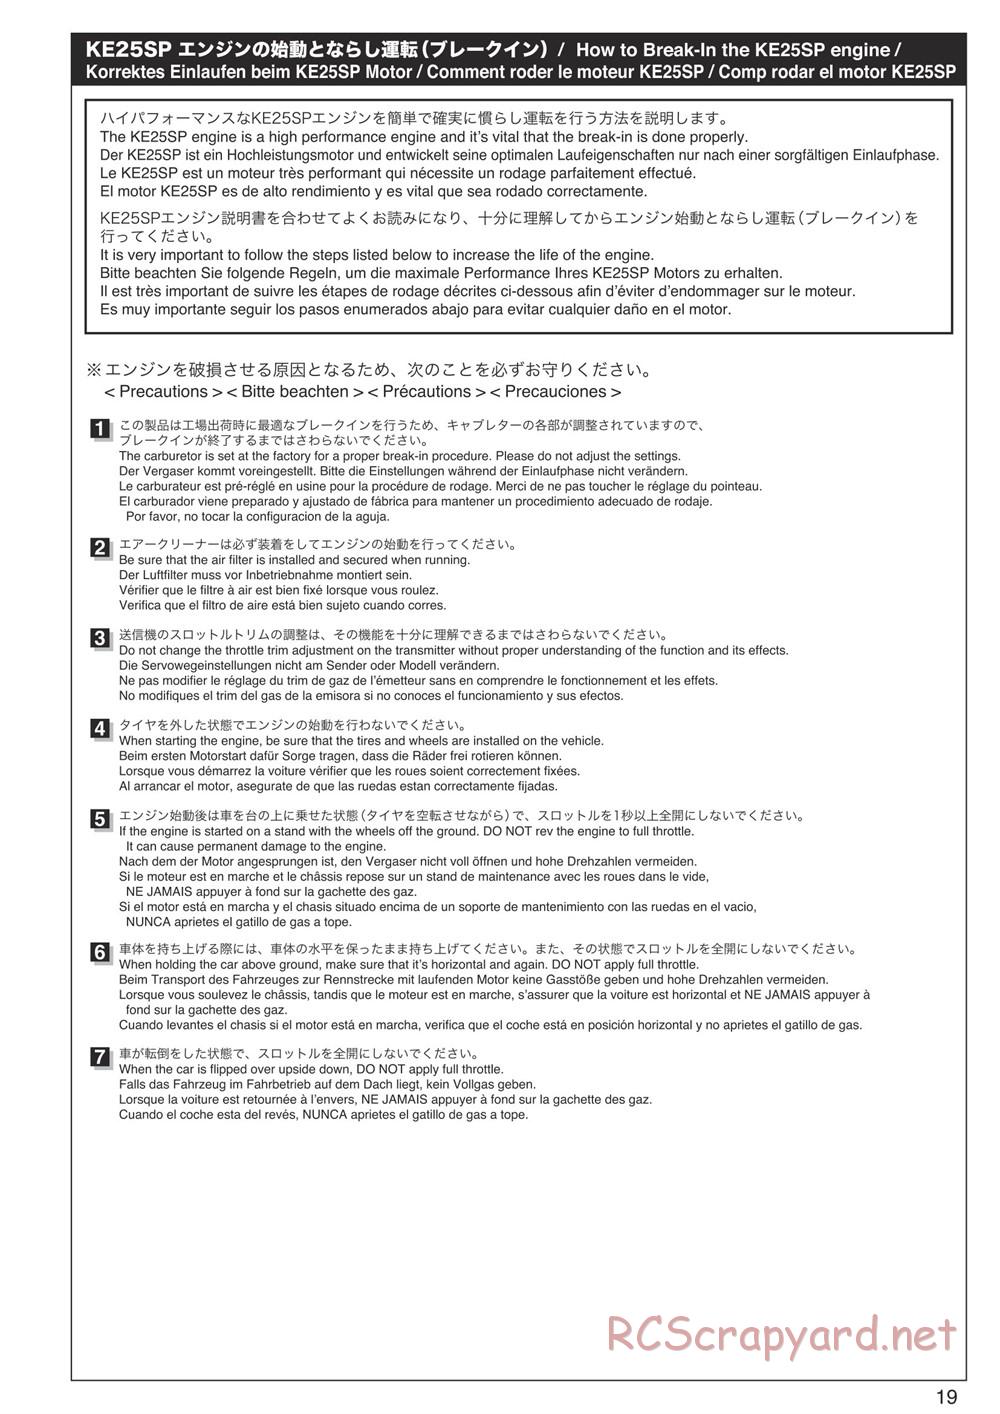 Kyosho - FO-XX 2.0 - Manual - Page 19